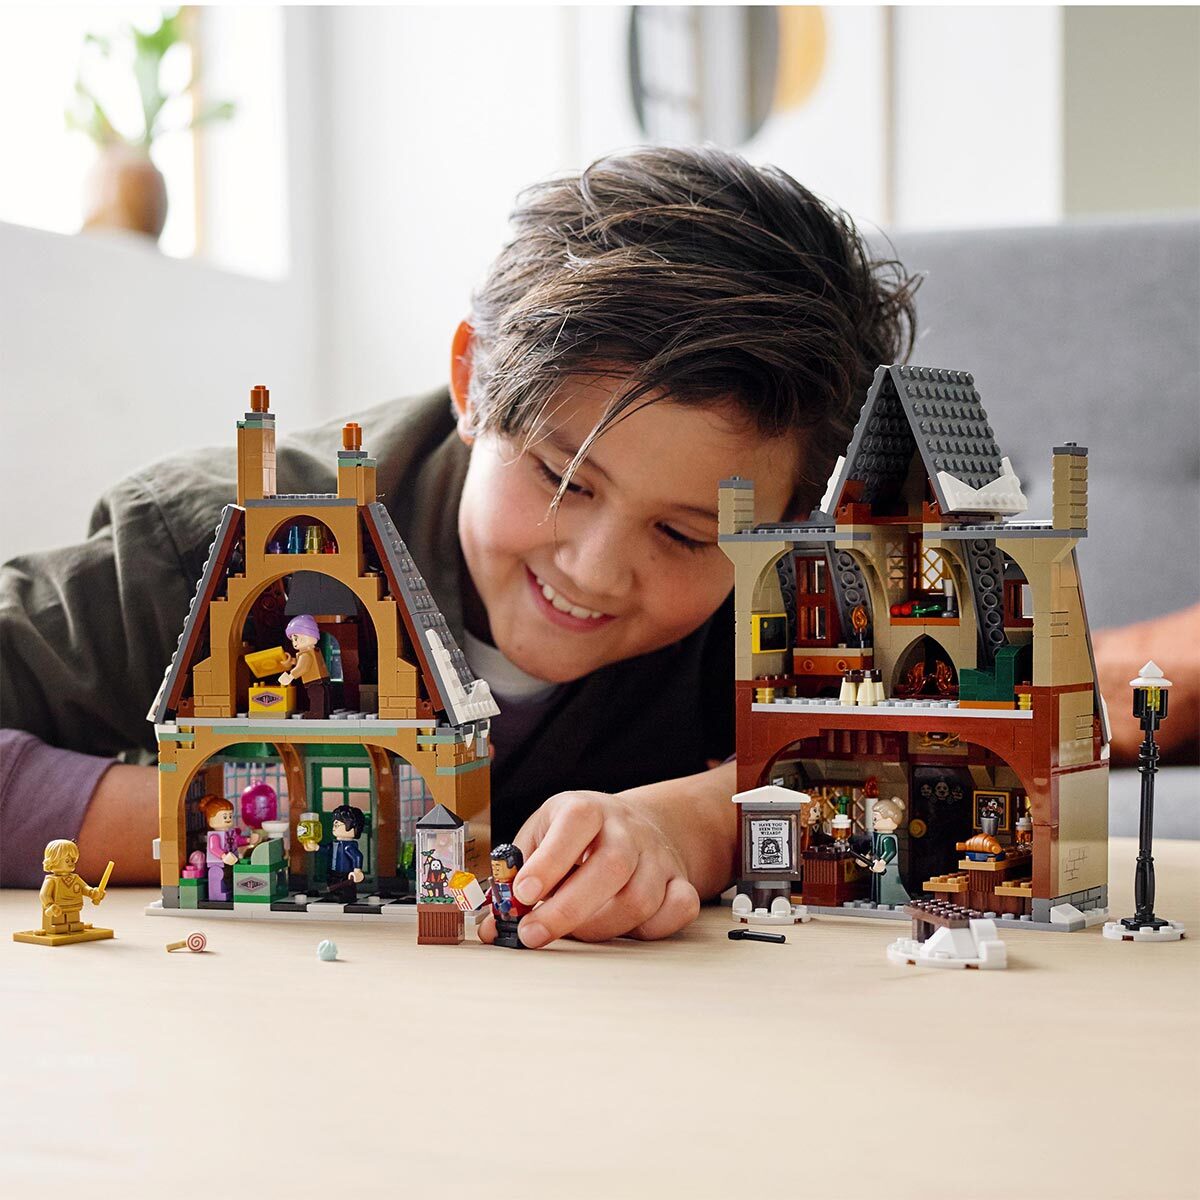 Buy LEGO Harry Potter Hogsmeade Village Visit Lifestyle Image at costco.co.uk